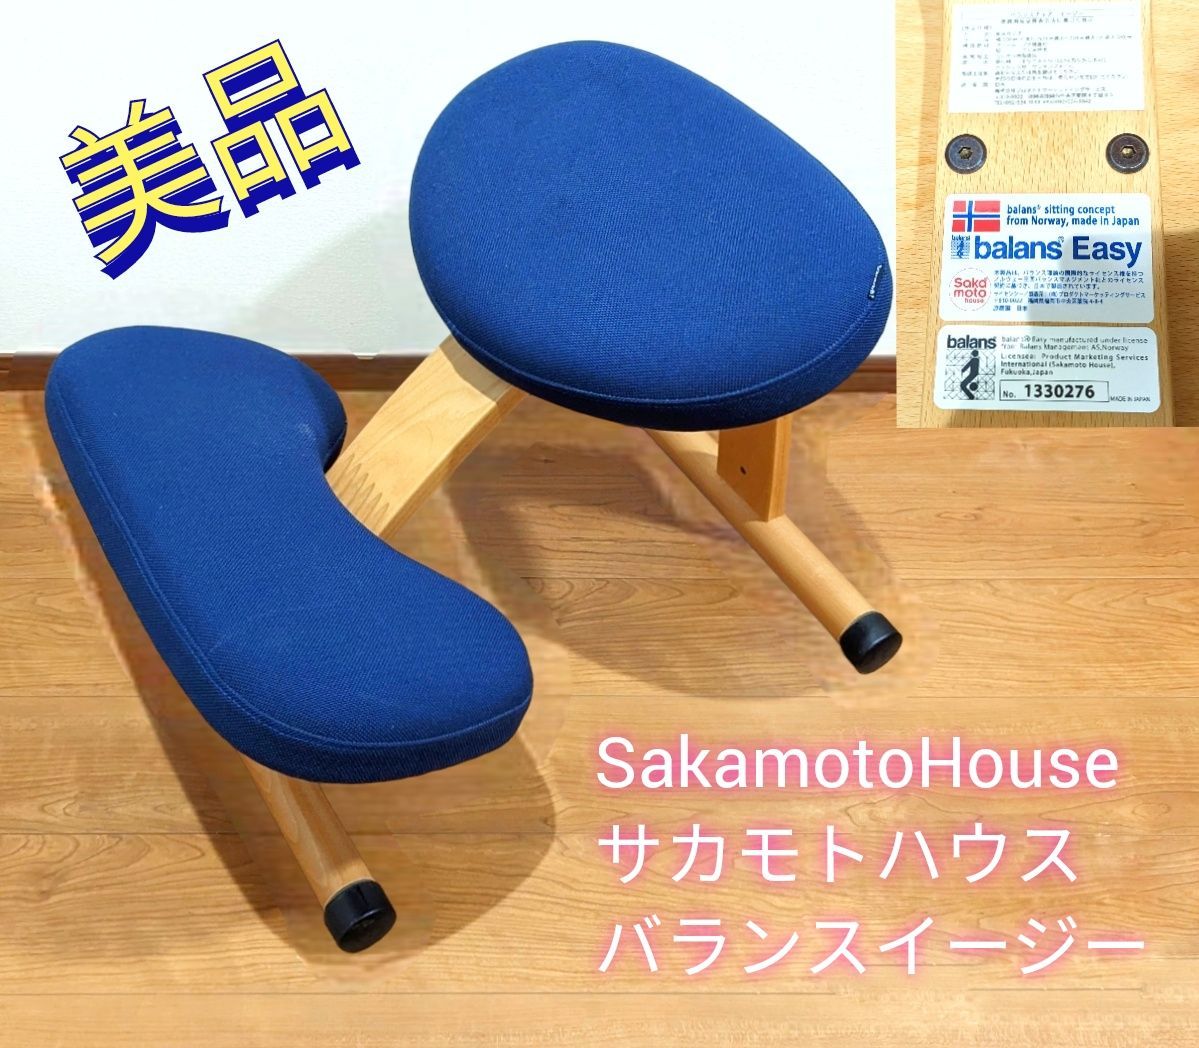 SakamotoHouse balance Easyサカモトハウスイージー-